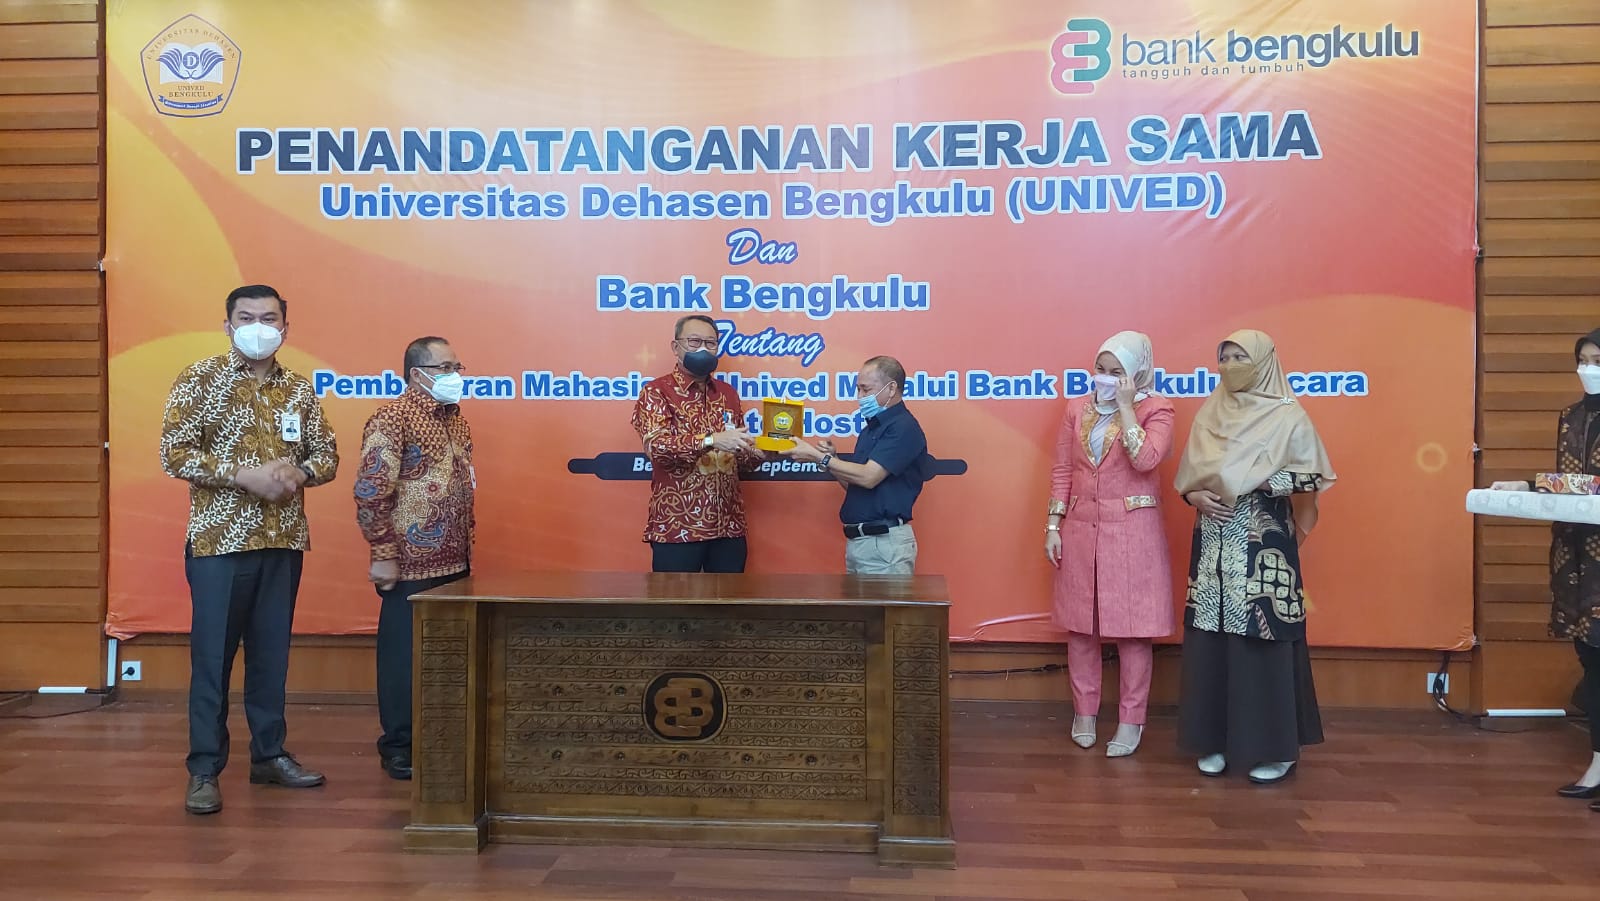 Penandatanganan PKS Host to Host Pembayaran Uang Kuliah antara Universitas Dehasen Bengkulu dengan Bank Bengkulu